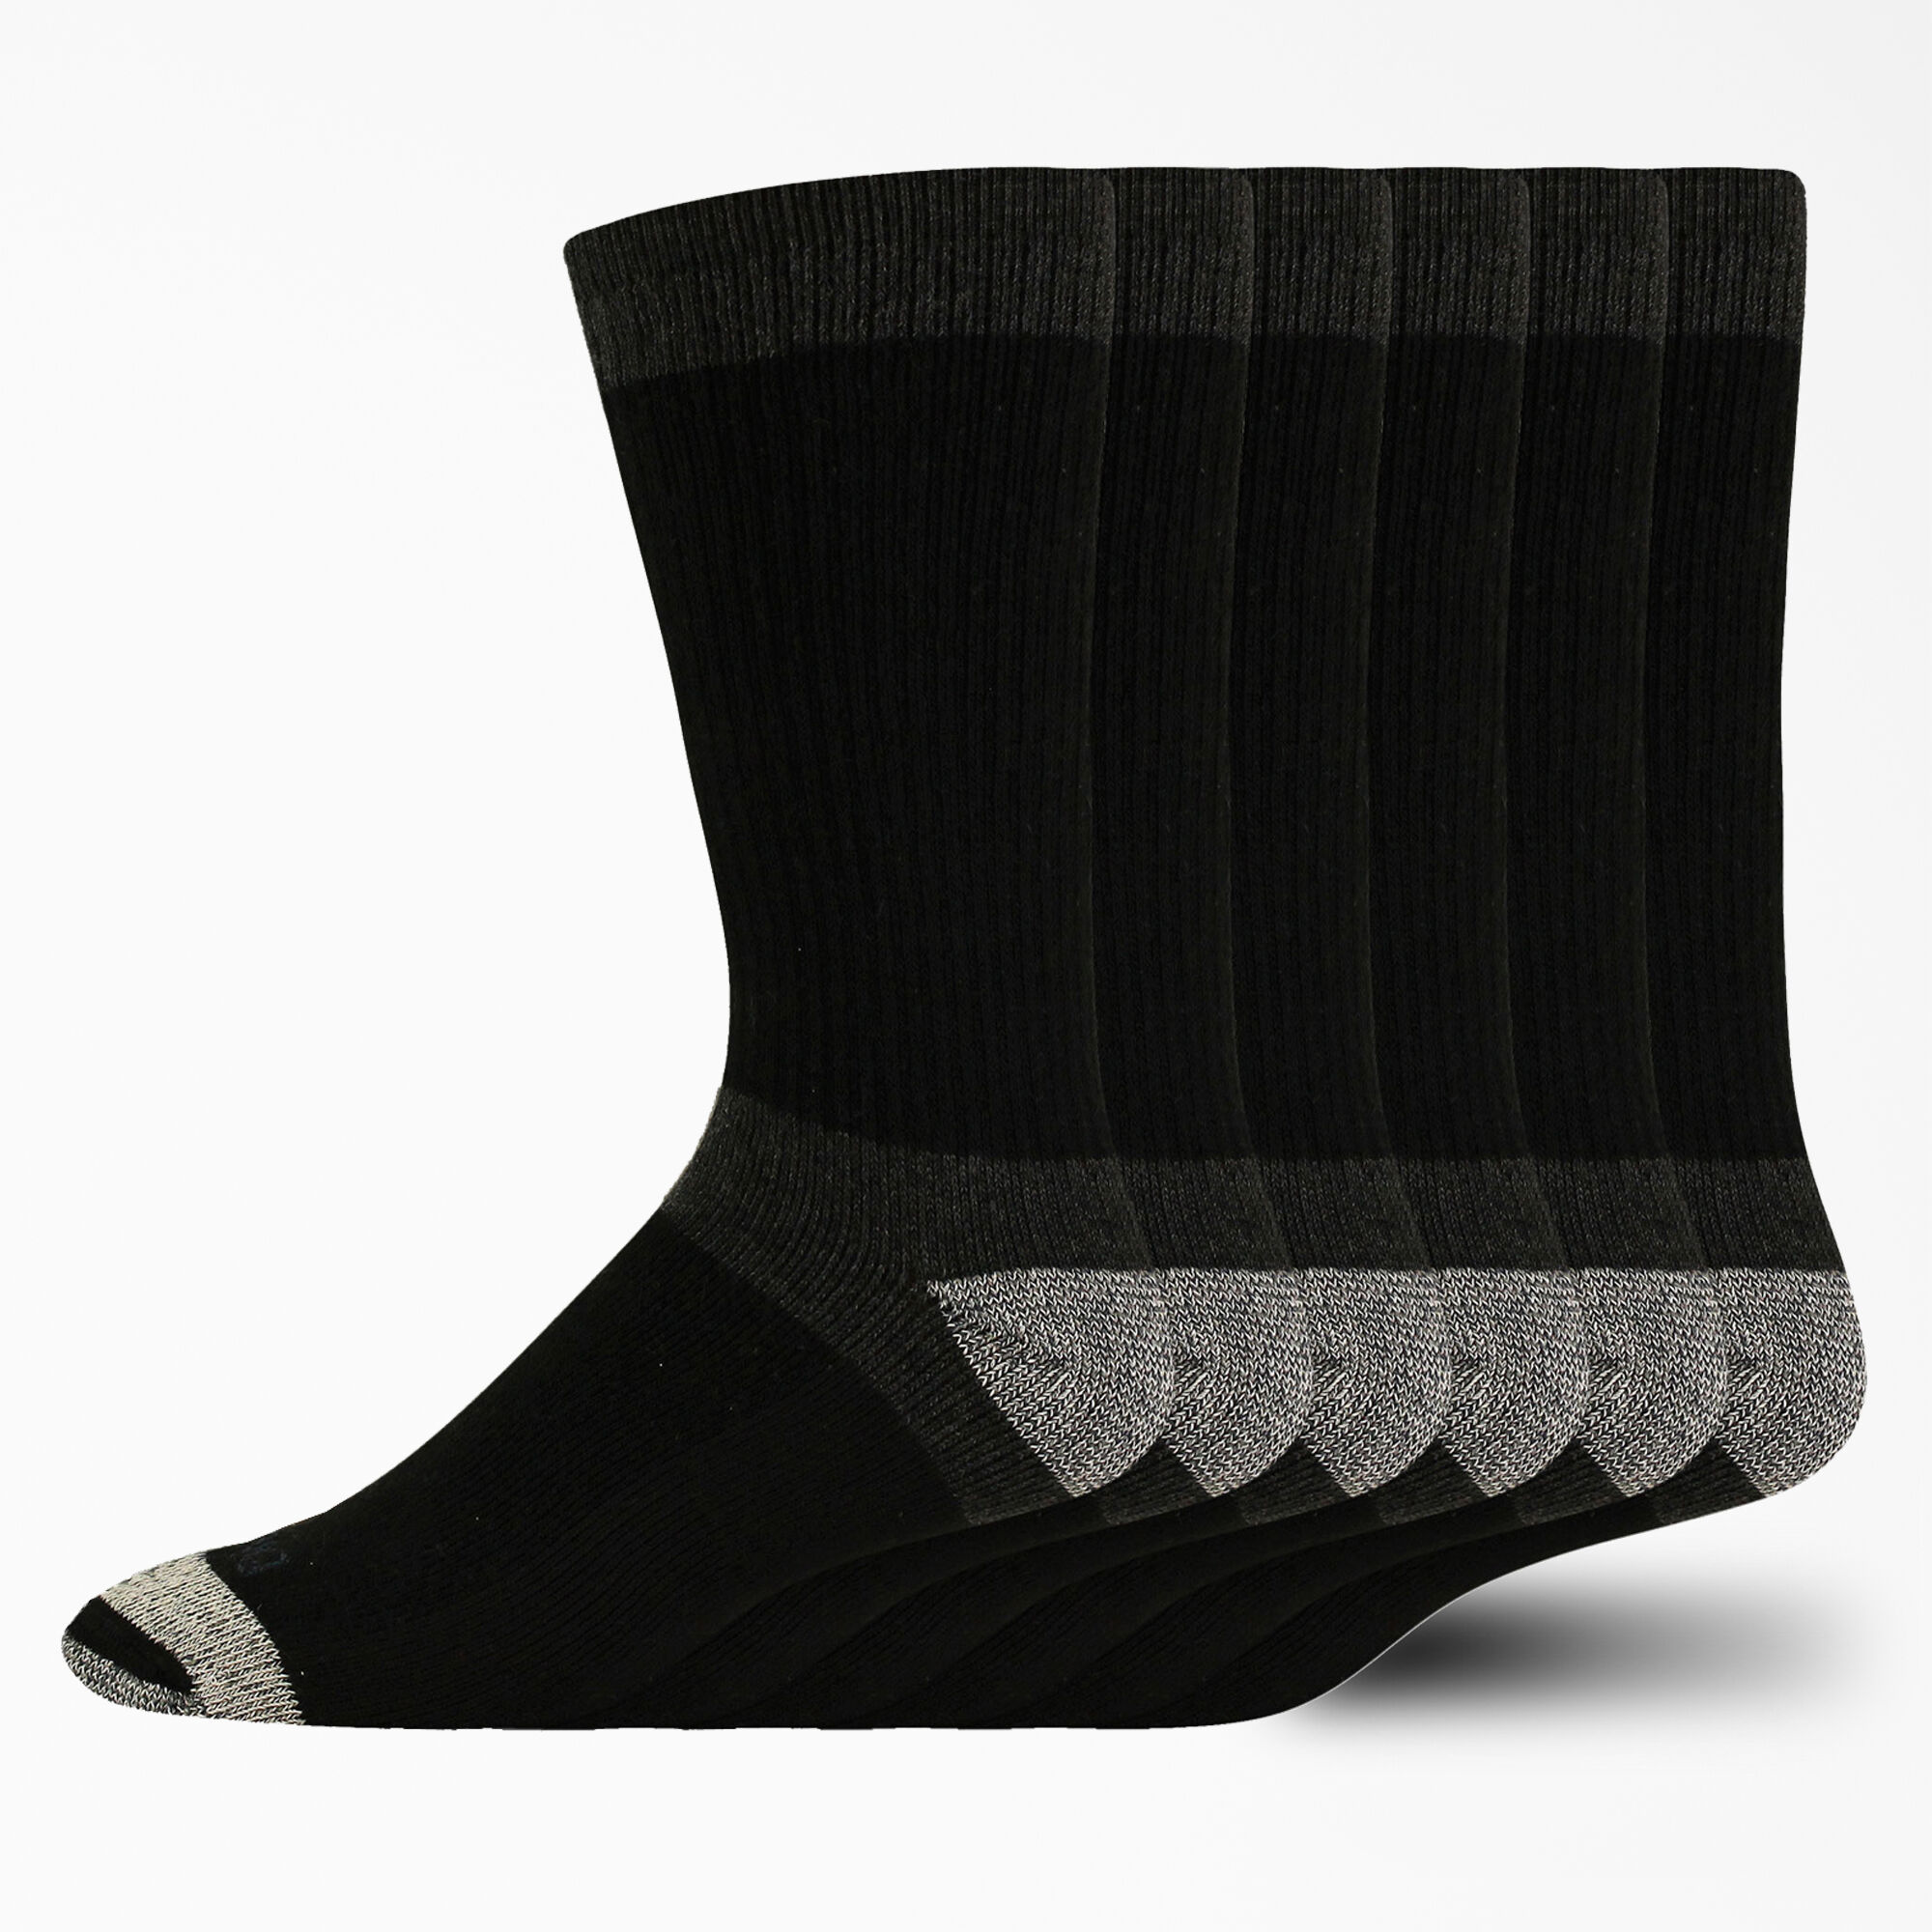 Work Socks and Crew Socks for Men & Women | Dickies US